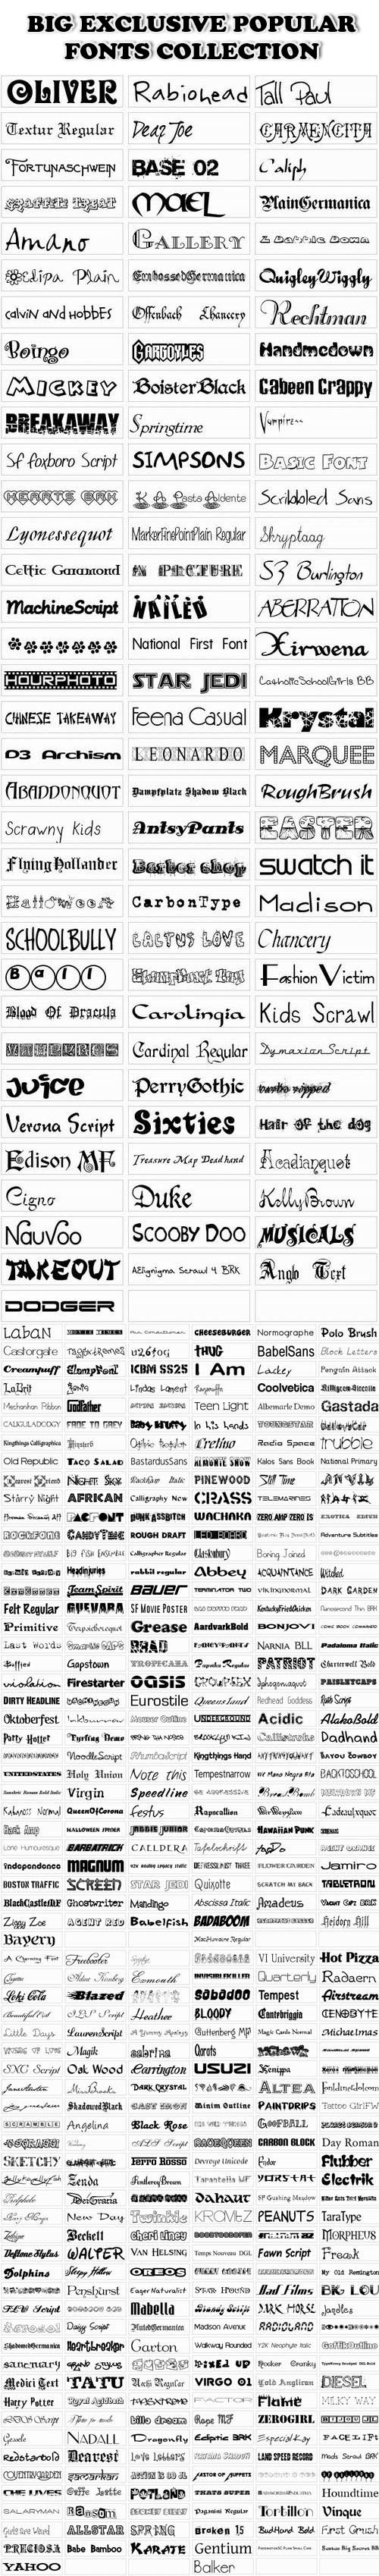 Big Exclusive Popular Fonts Collection (REUPLOAD)